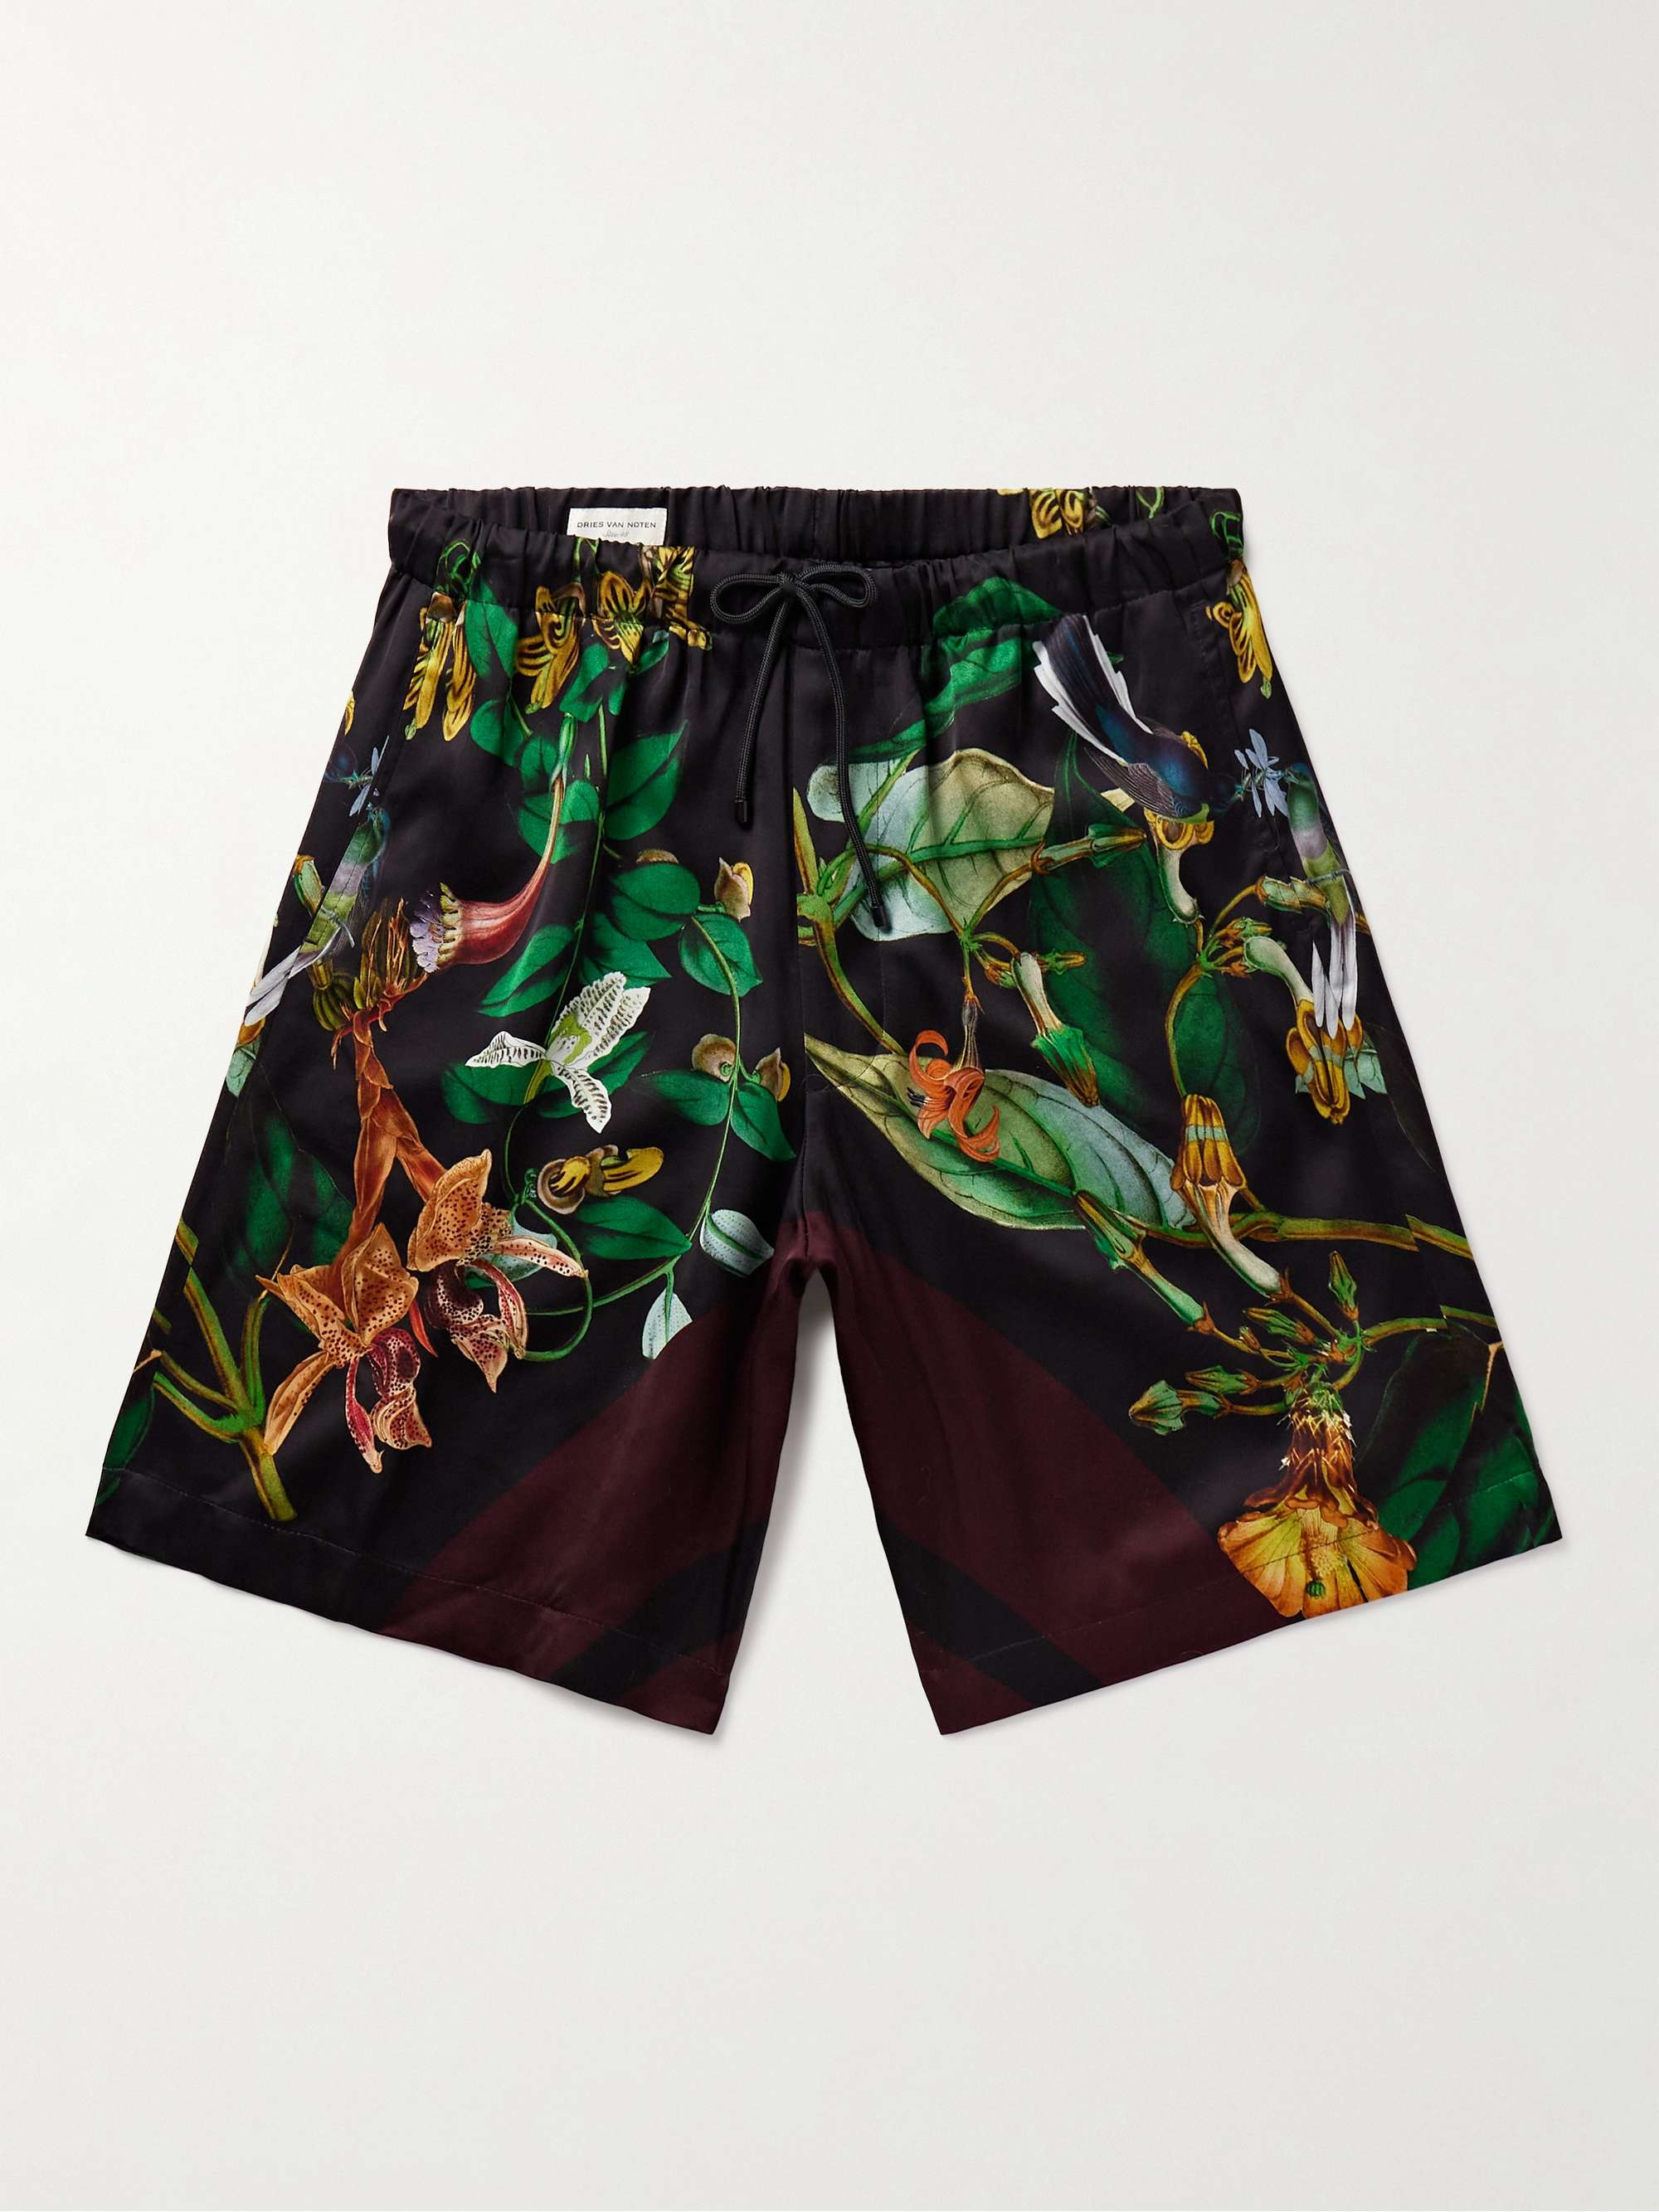 Polo Ralph Lauren 100% Viscose Athletic Shorts for Men